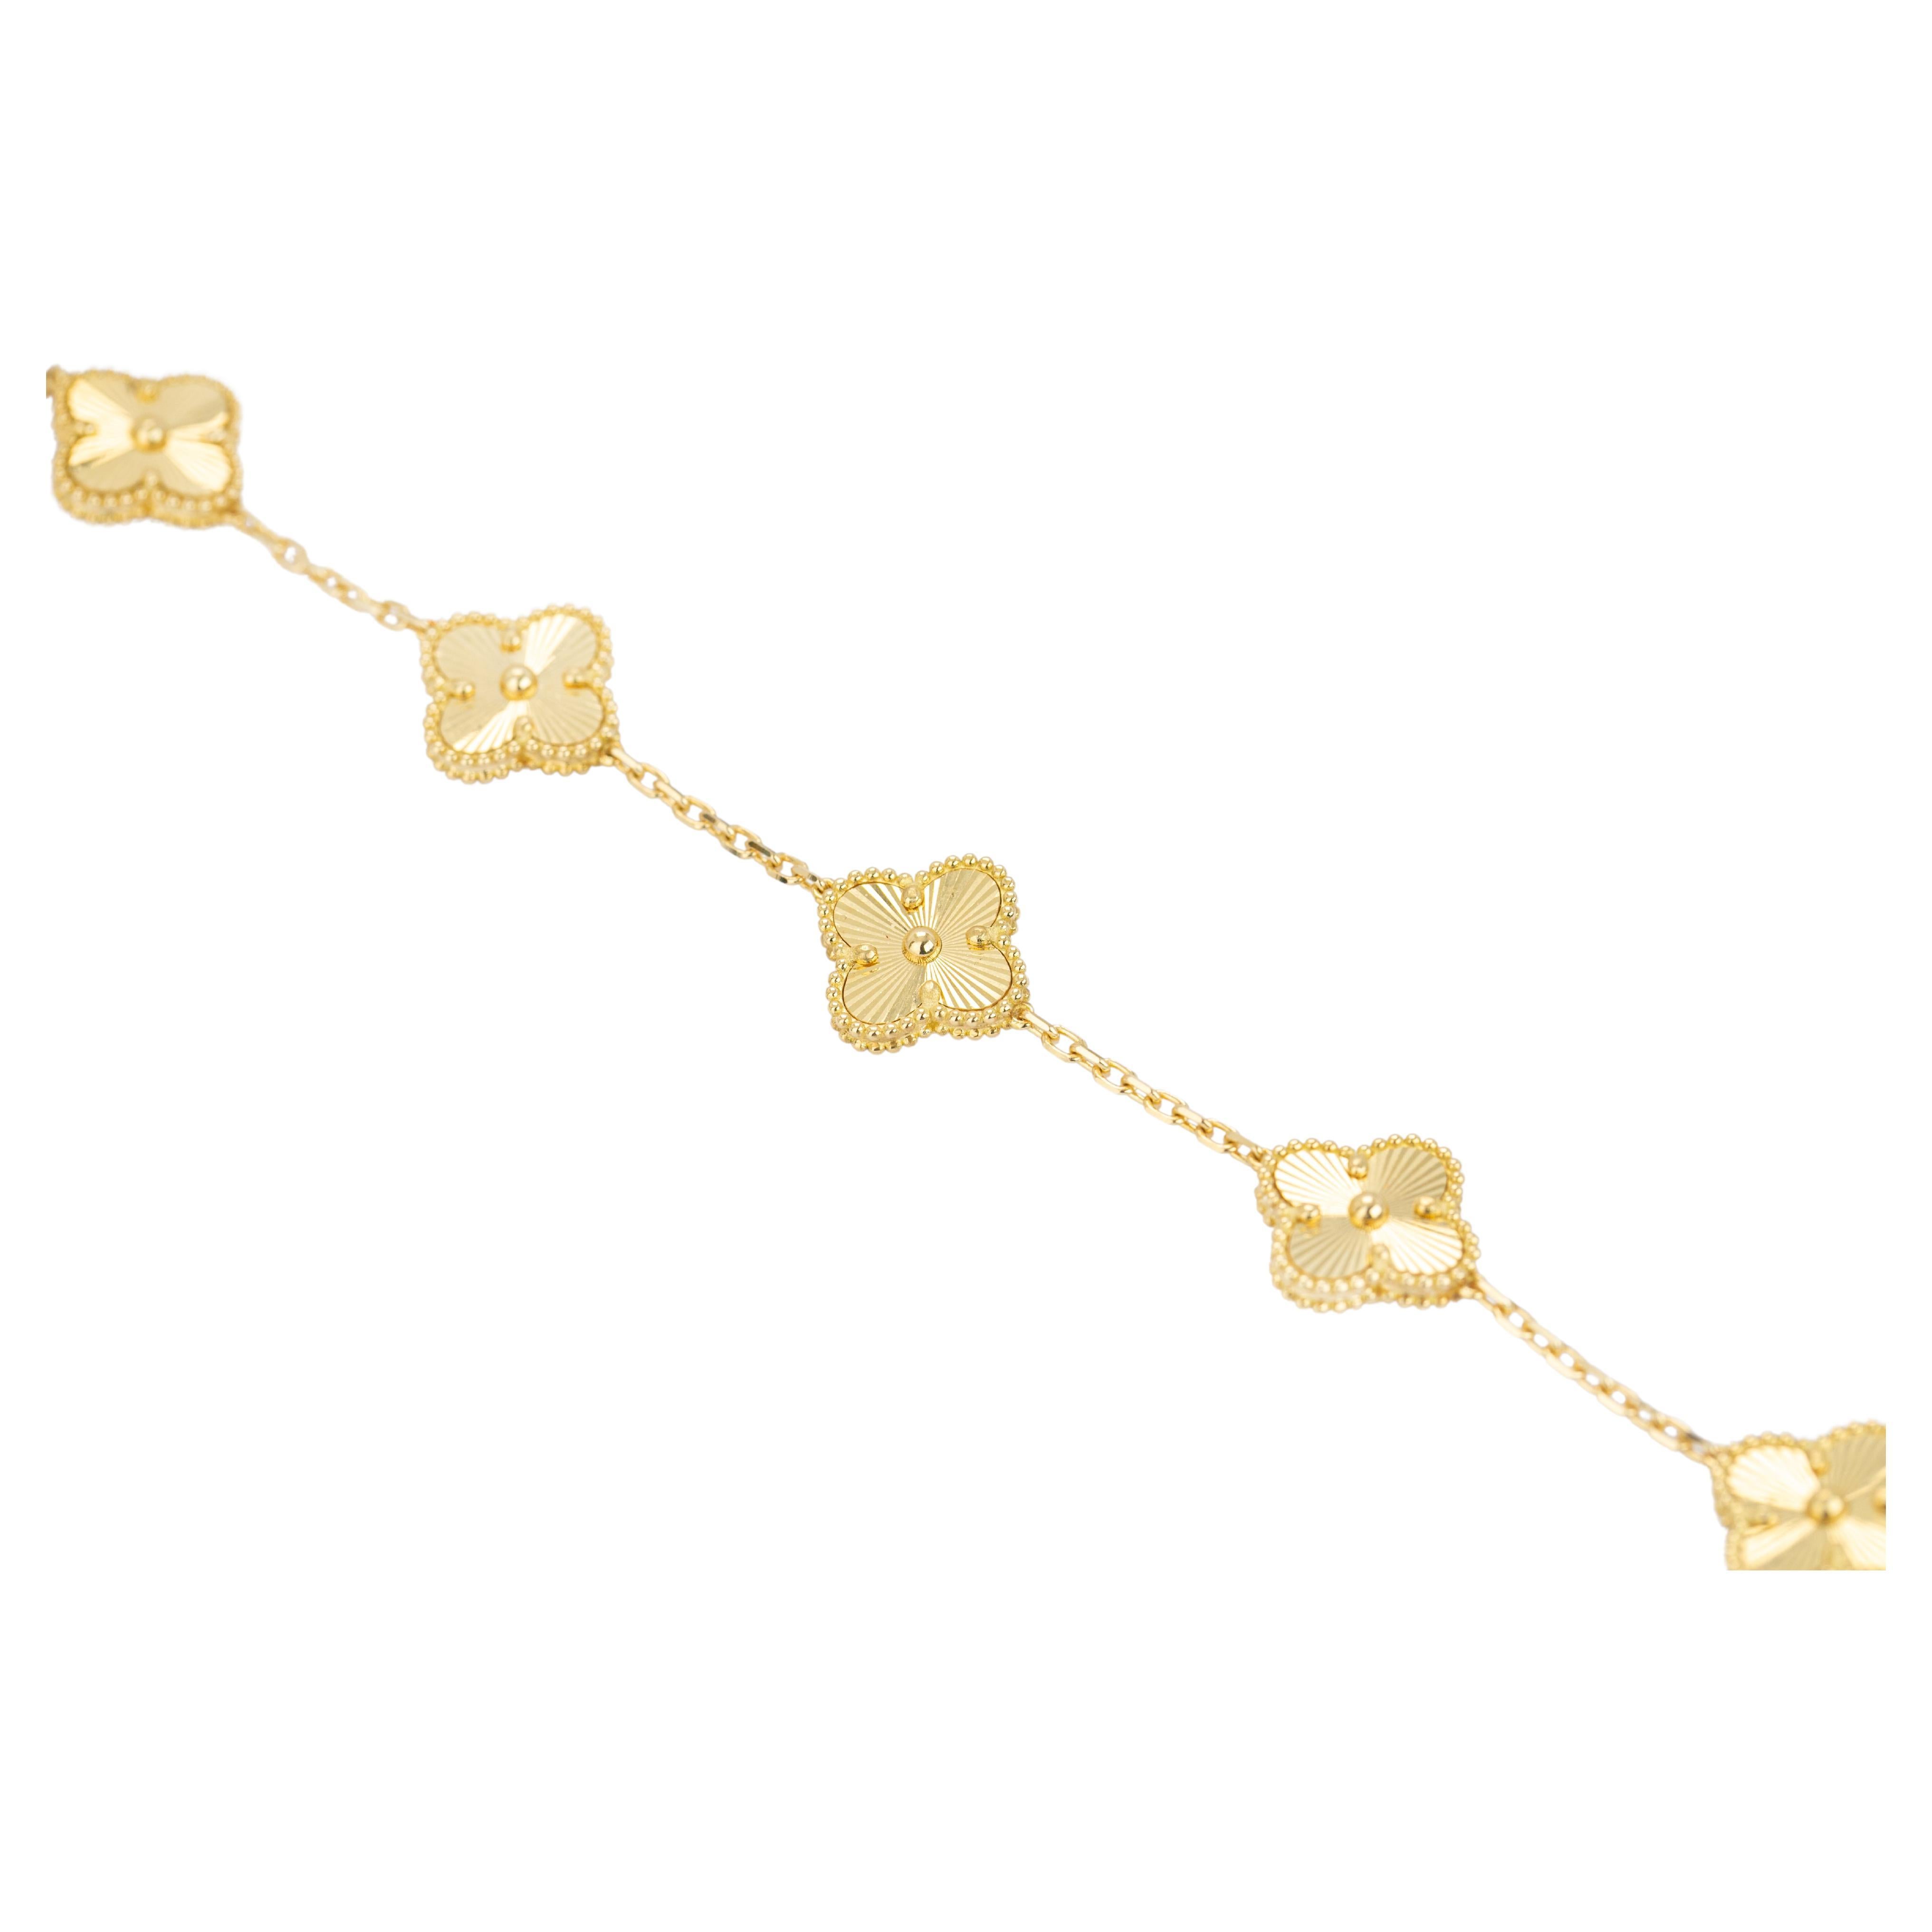 Bracelet en or 18k avec chaîne audacieuse, bracelet en chaîne en or 18k, bracelet rectangulaire en vente